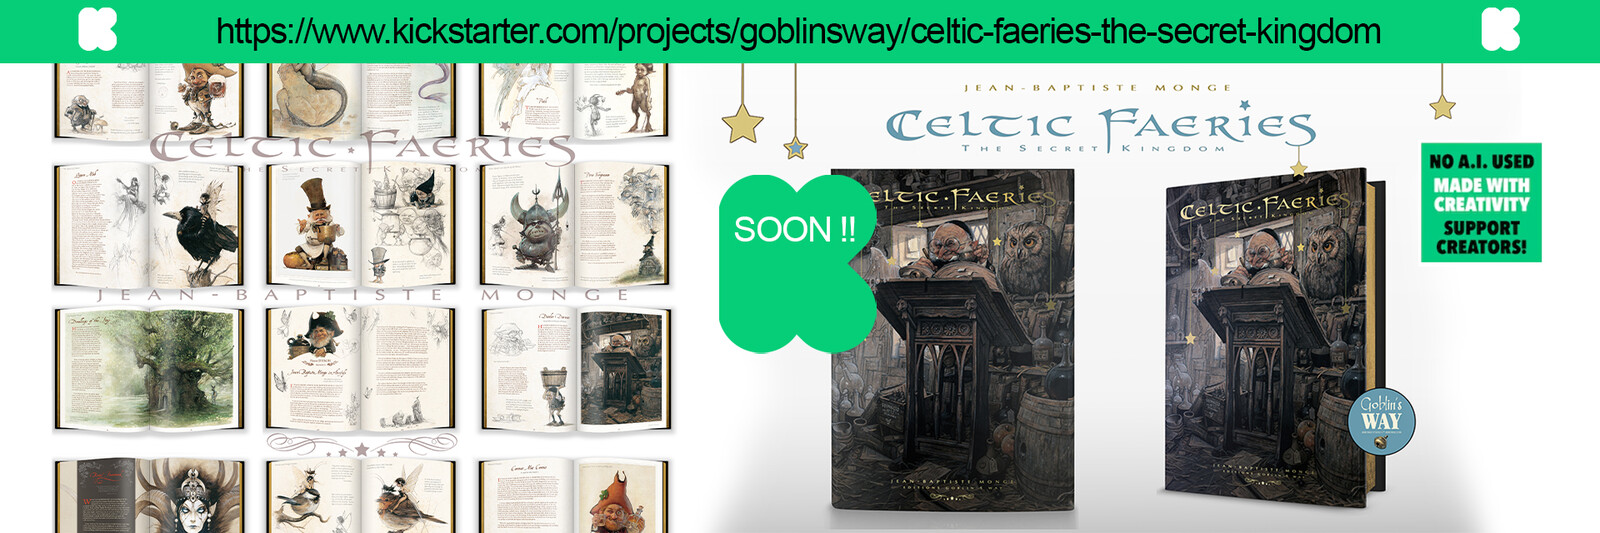 Be notify on Launch!
https://www.kickstarter.com/projects/goblinsway/celtic-faeries-the-secret-kingdom
